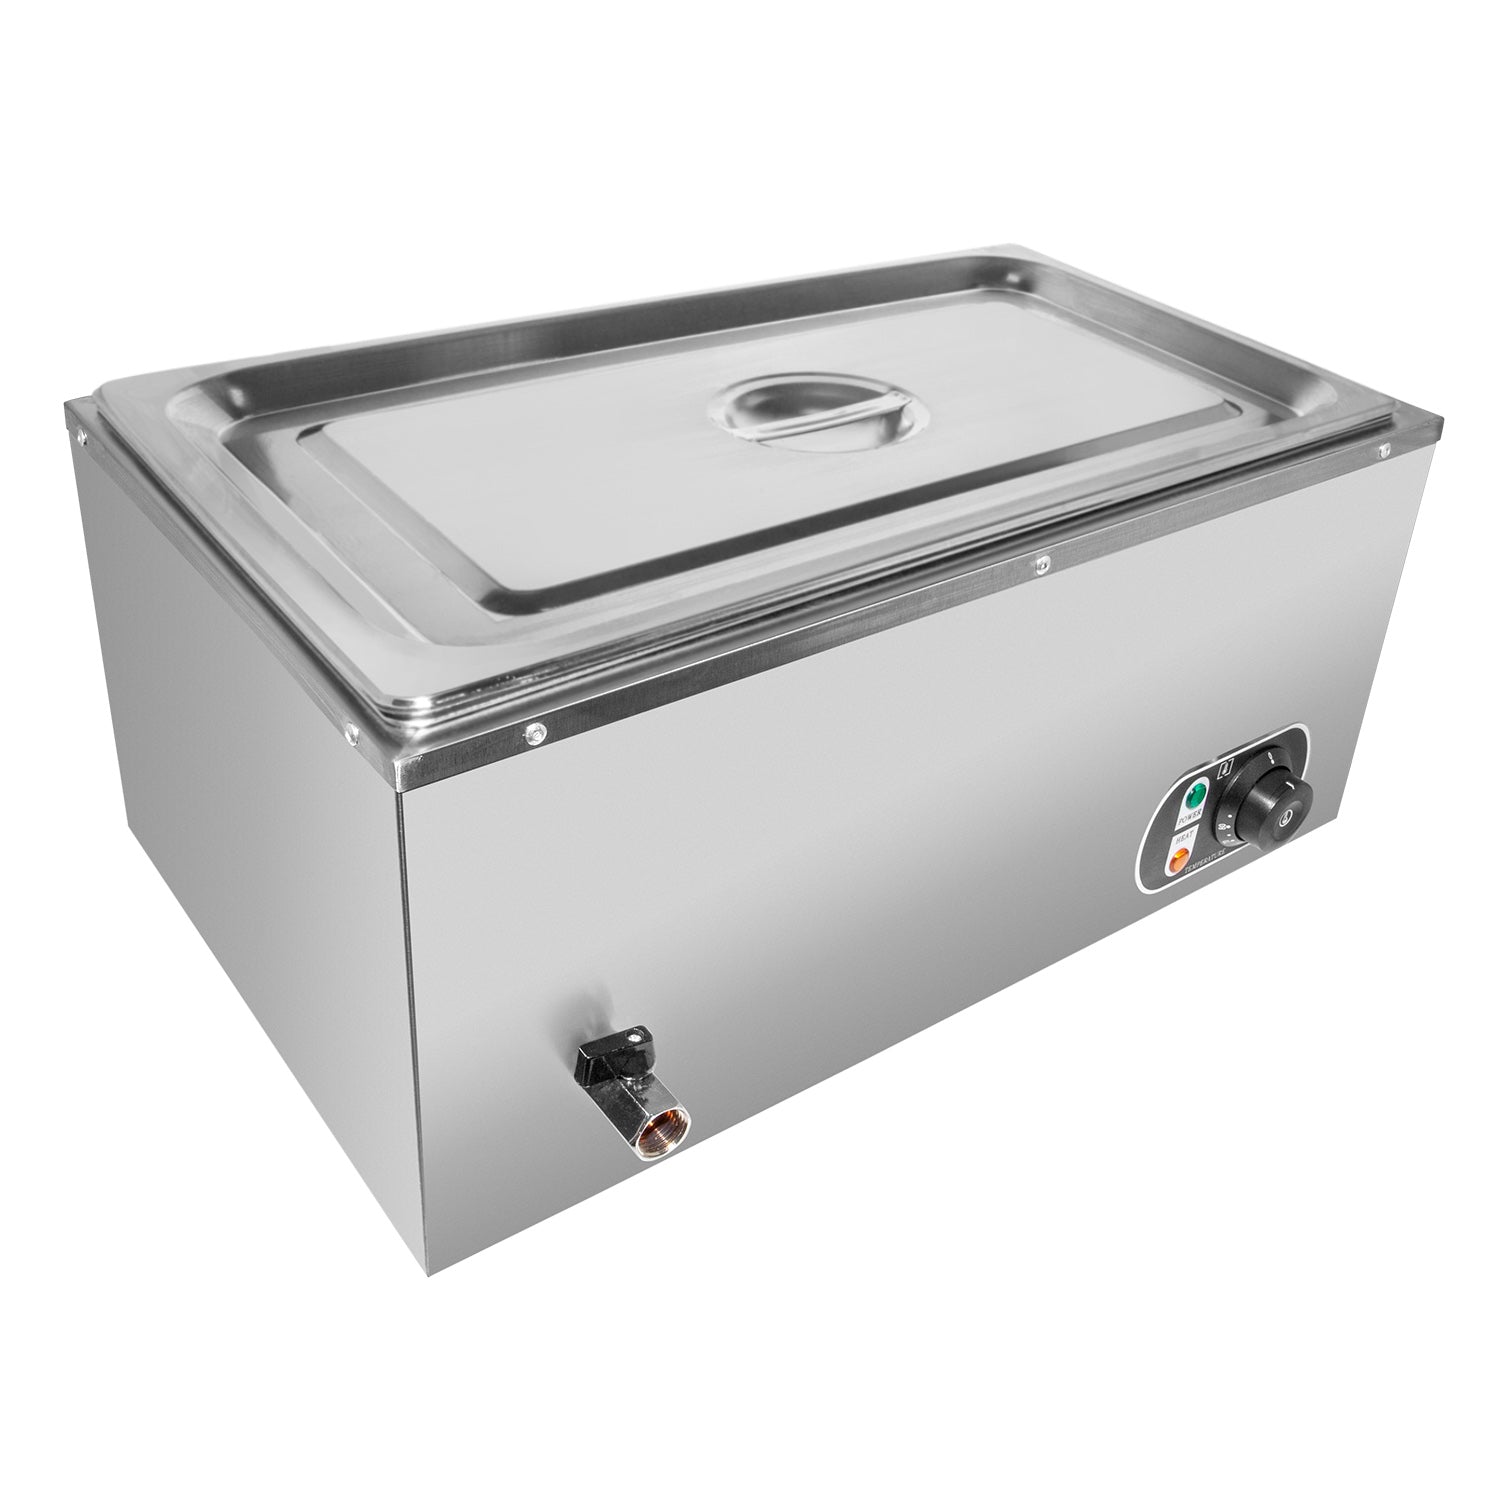 ALDKitchen Bain Marie Steam Warmer | Electric Buffet Food Warmer | Stainless Steel | 1 tank | 110V